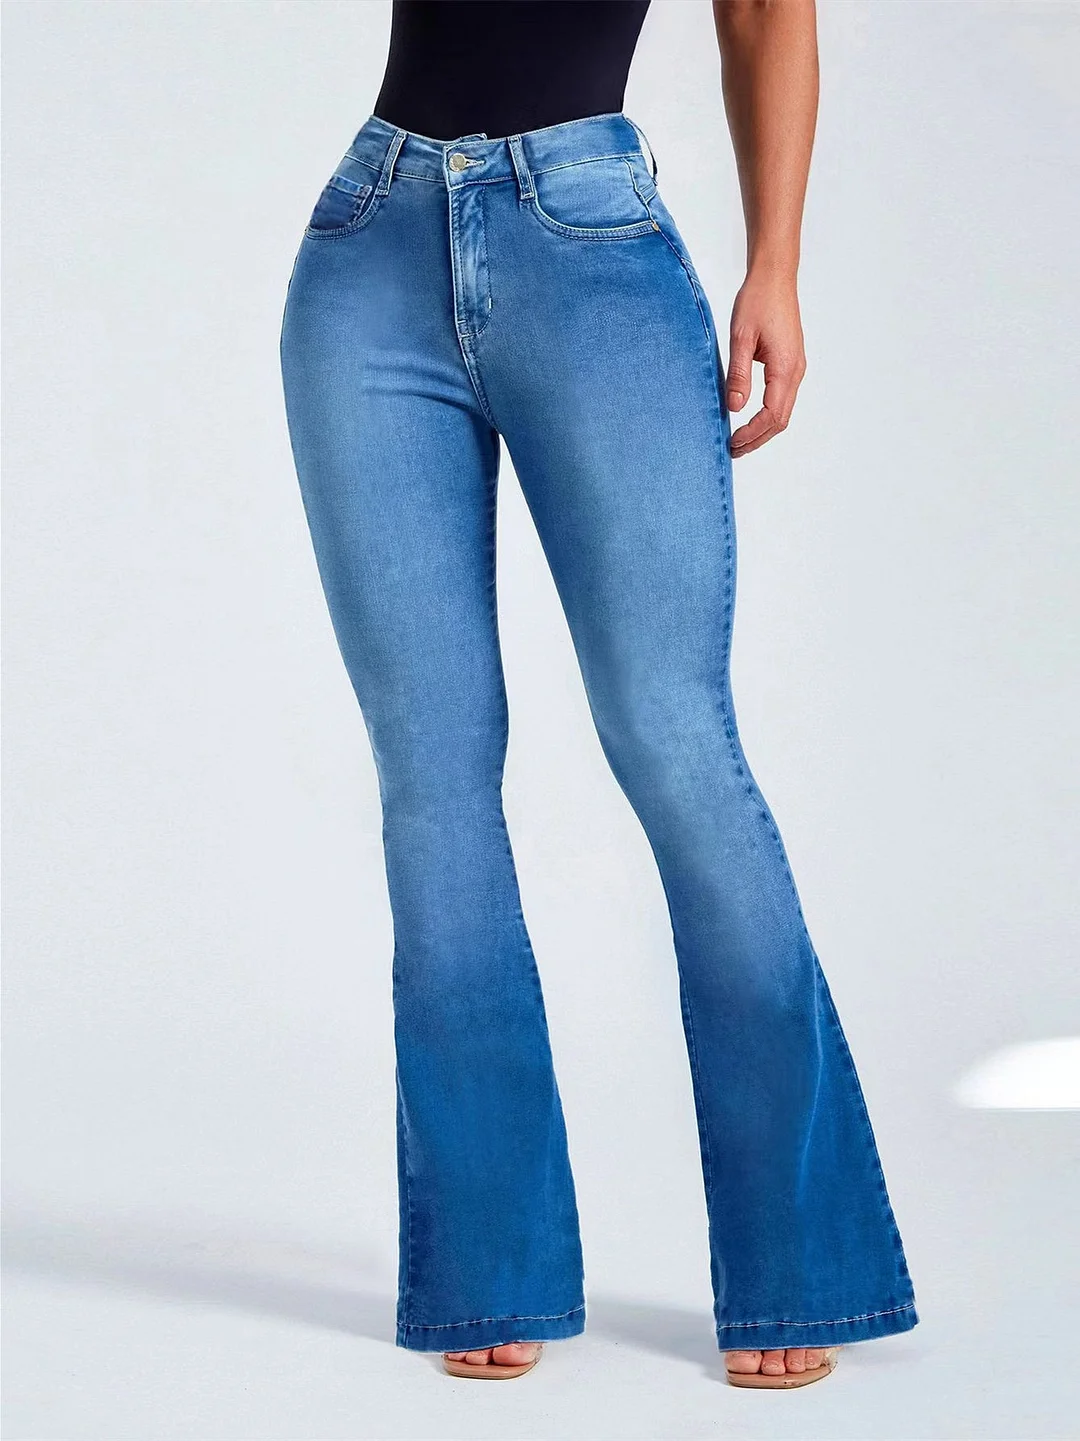 Women plus size clothing Women's Stretch Solid Color Flare Leg Jeans Pants-Nordswear